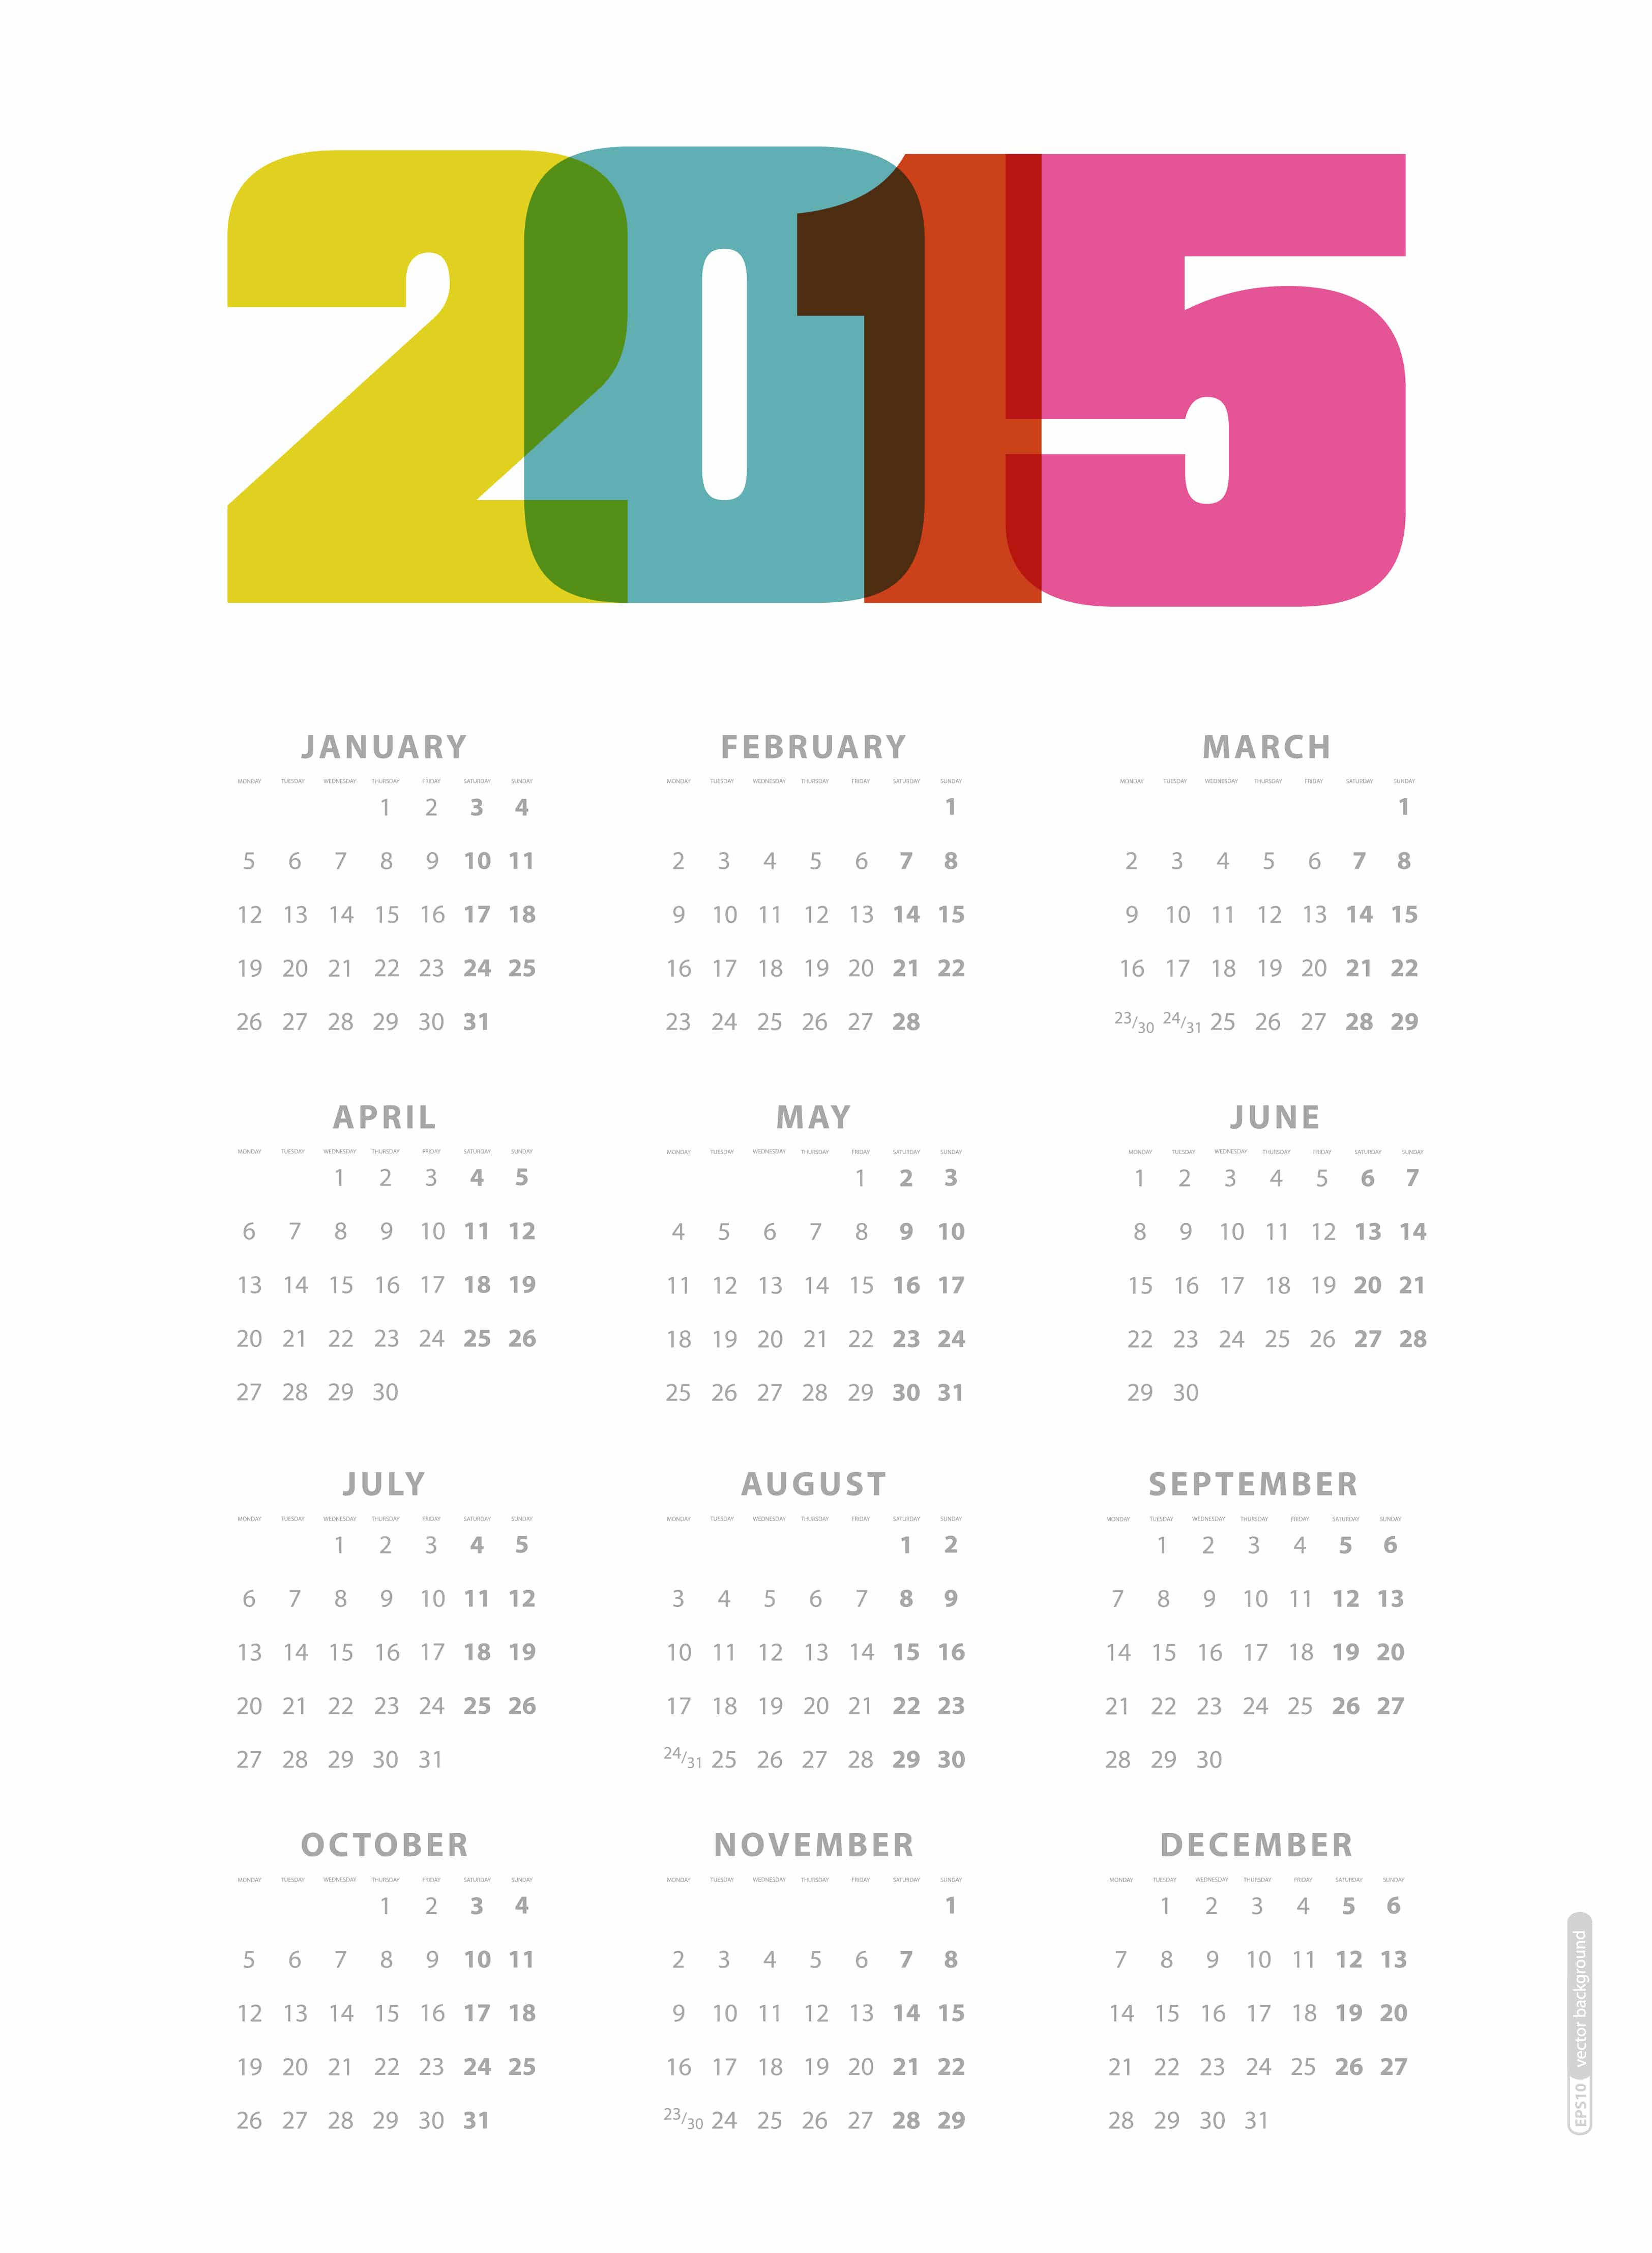 Your Marketing Calendar For 2015 thumbnail